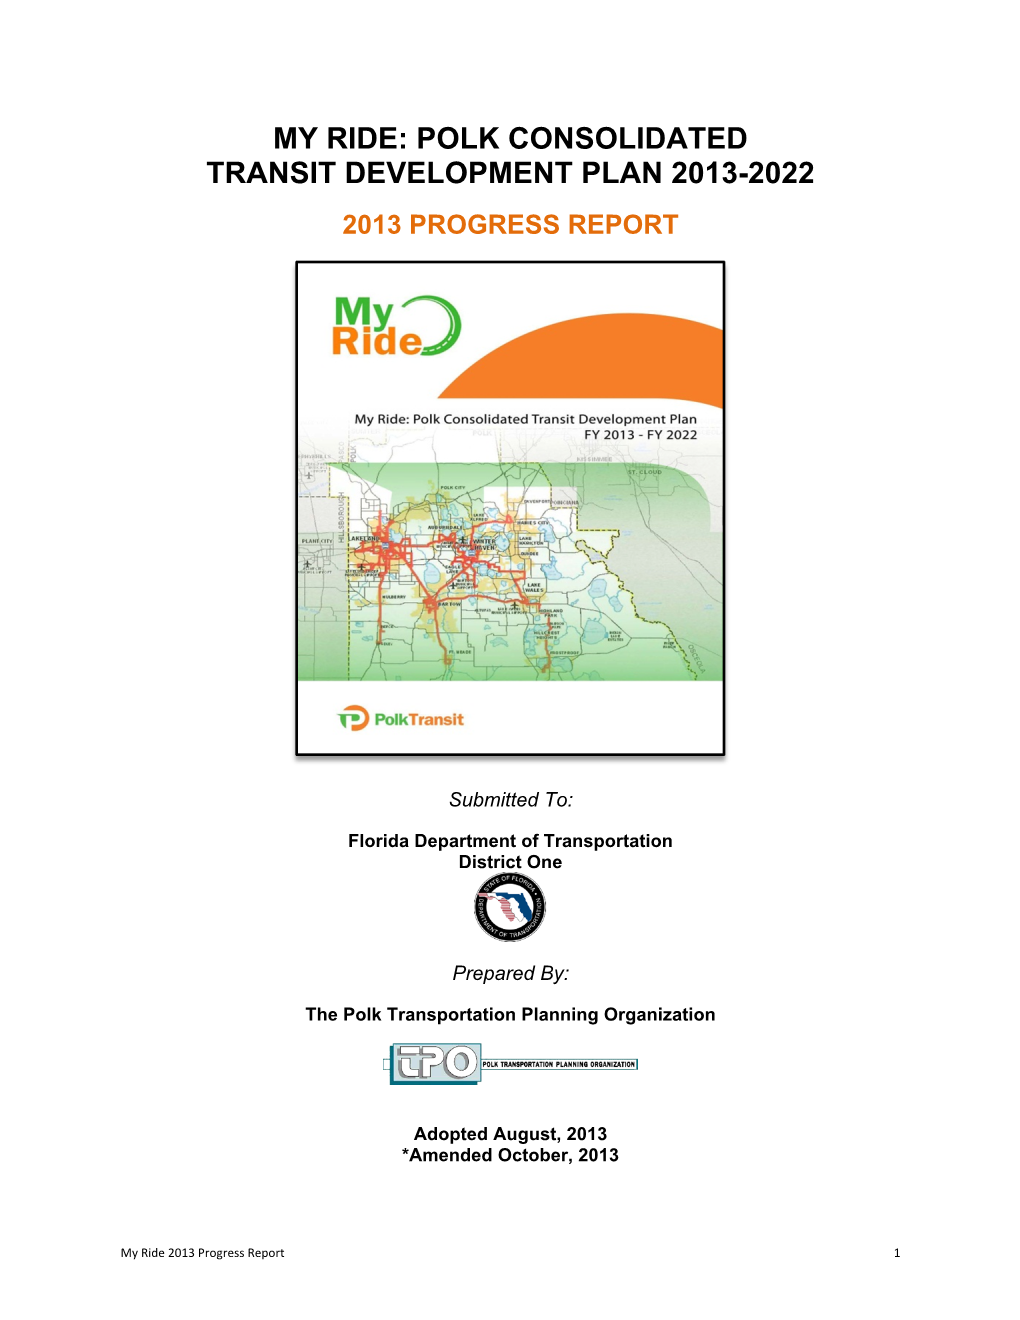 My Ride: Polk Consolidated Transit Development Plan 2013-2022